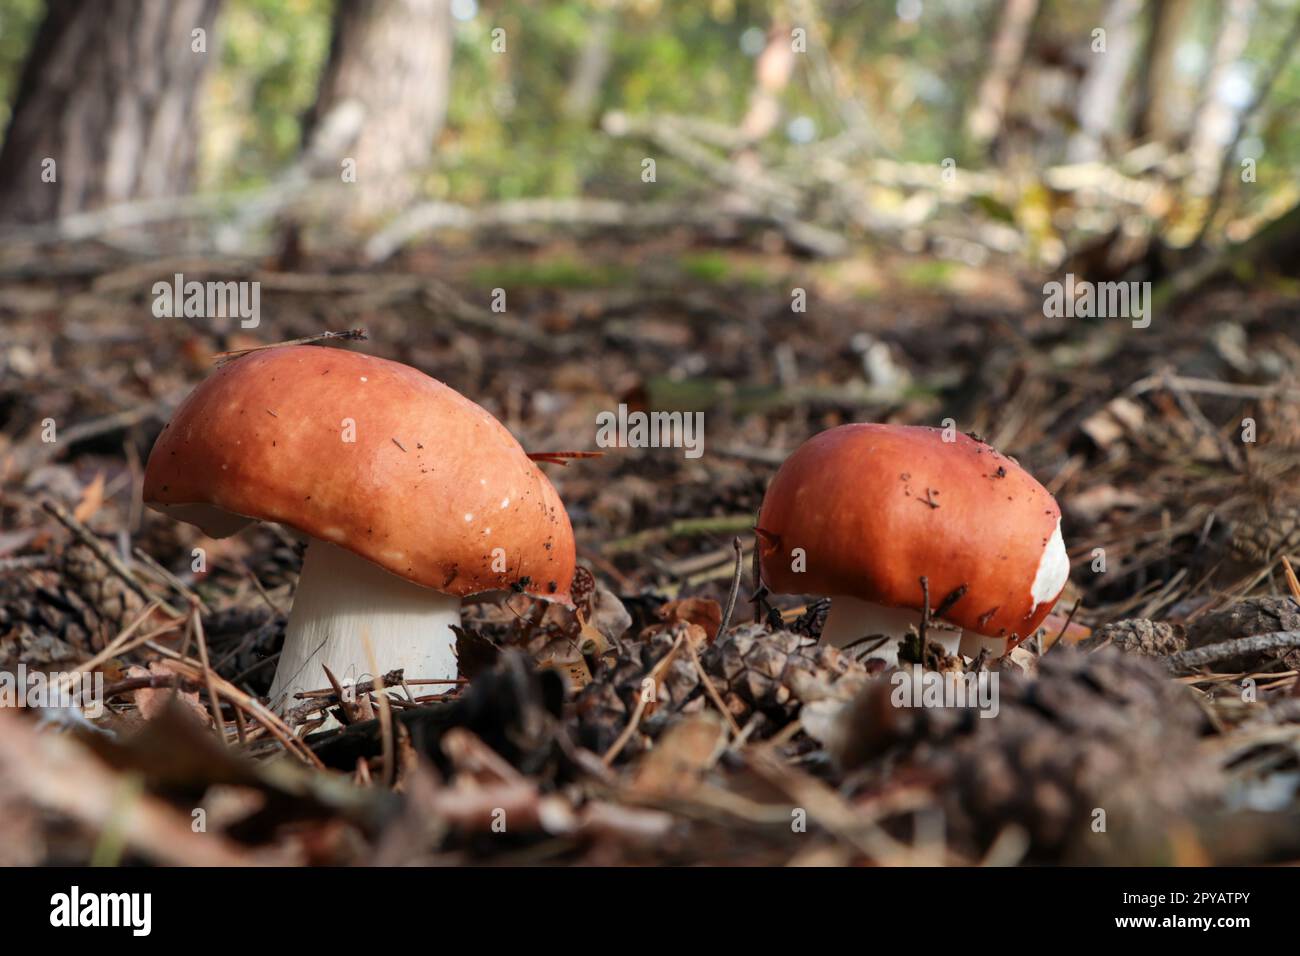 Russula-Pilze wachsen im Wald, Nahaufnahme Stockfoto